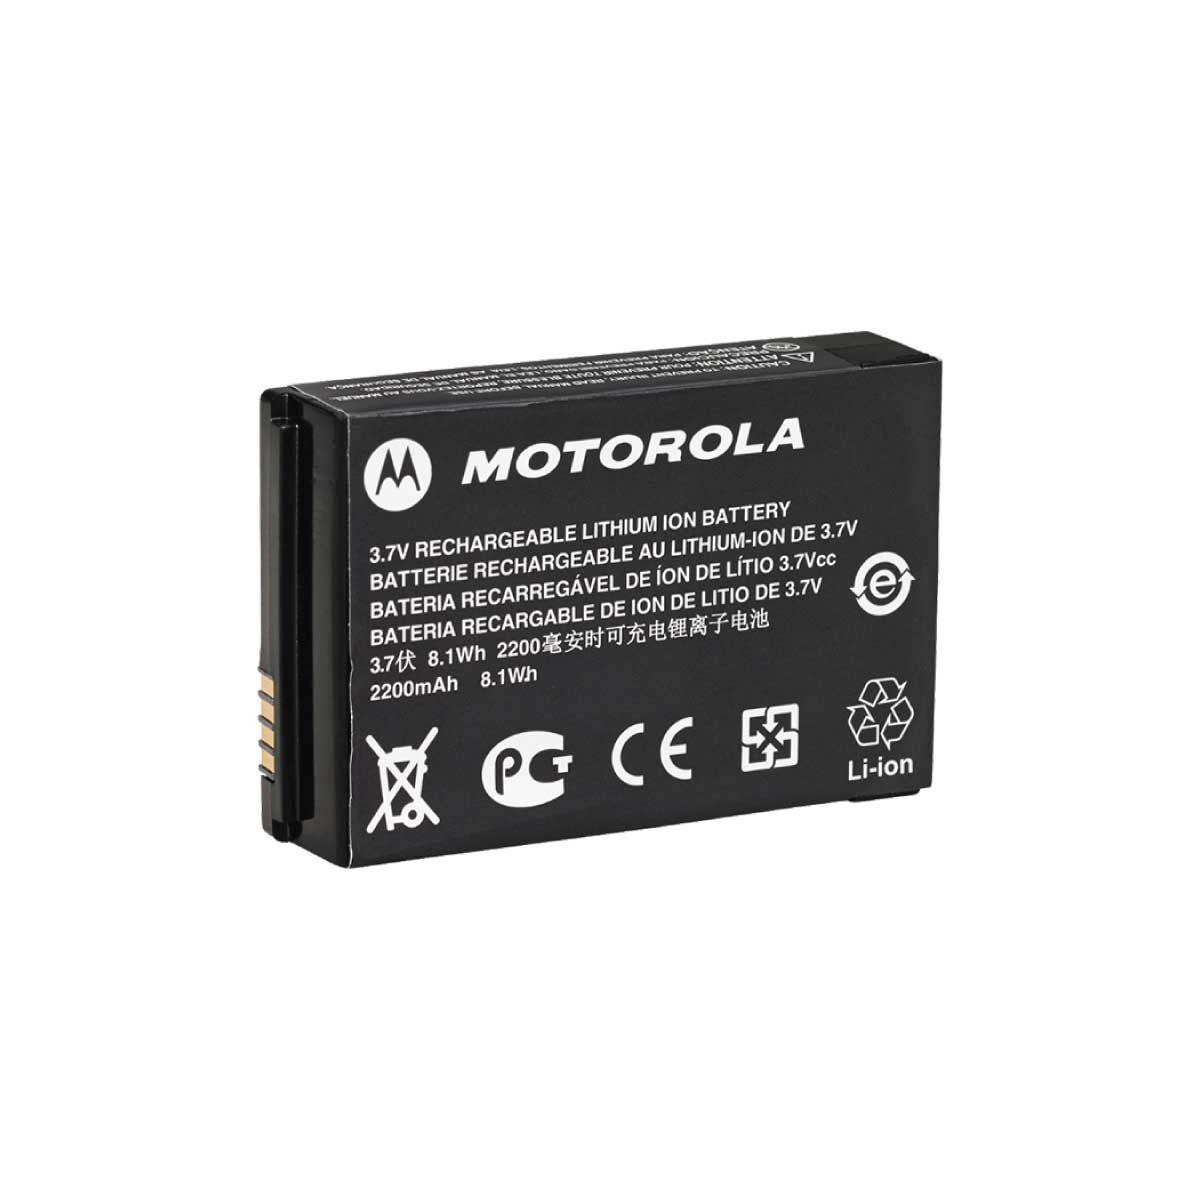 Motorola SL4010 - Slim Ultra High Capacity LI-Ion Battery 2300